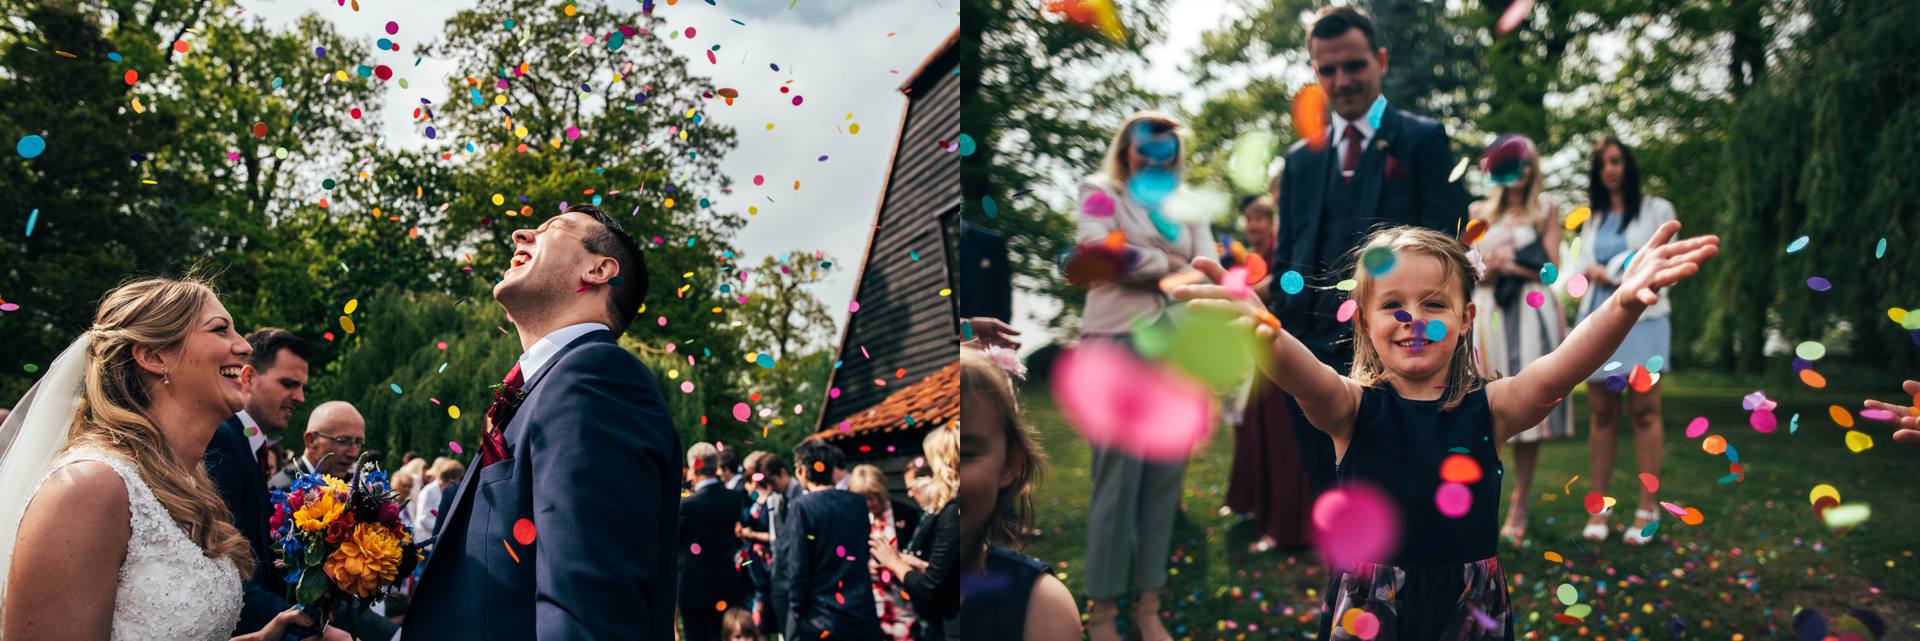 Colourful Rustic Spring Blake Hall Ongar Barn Wedding Essex UK Documentary Wedding Photographer 